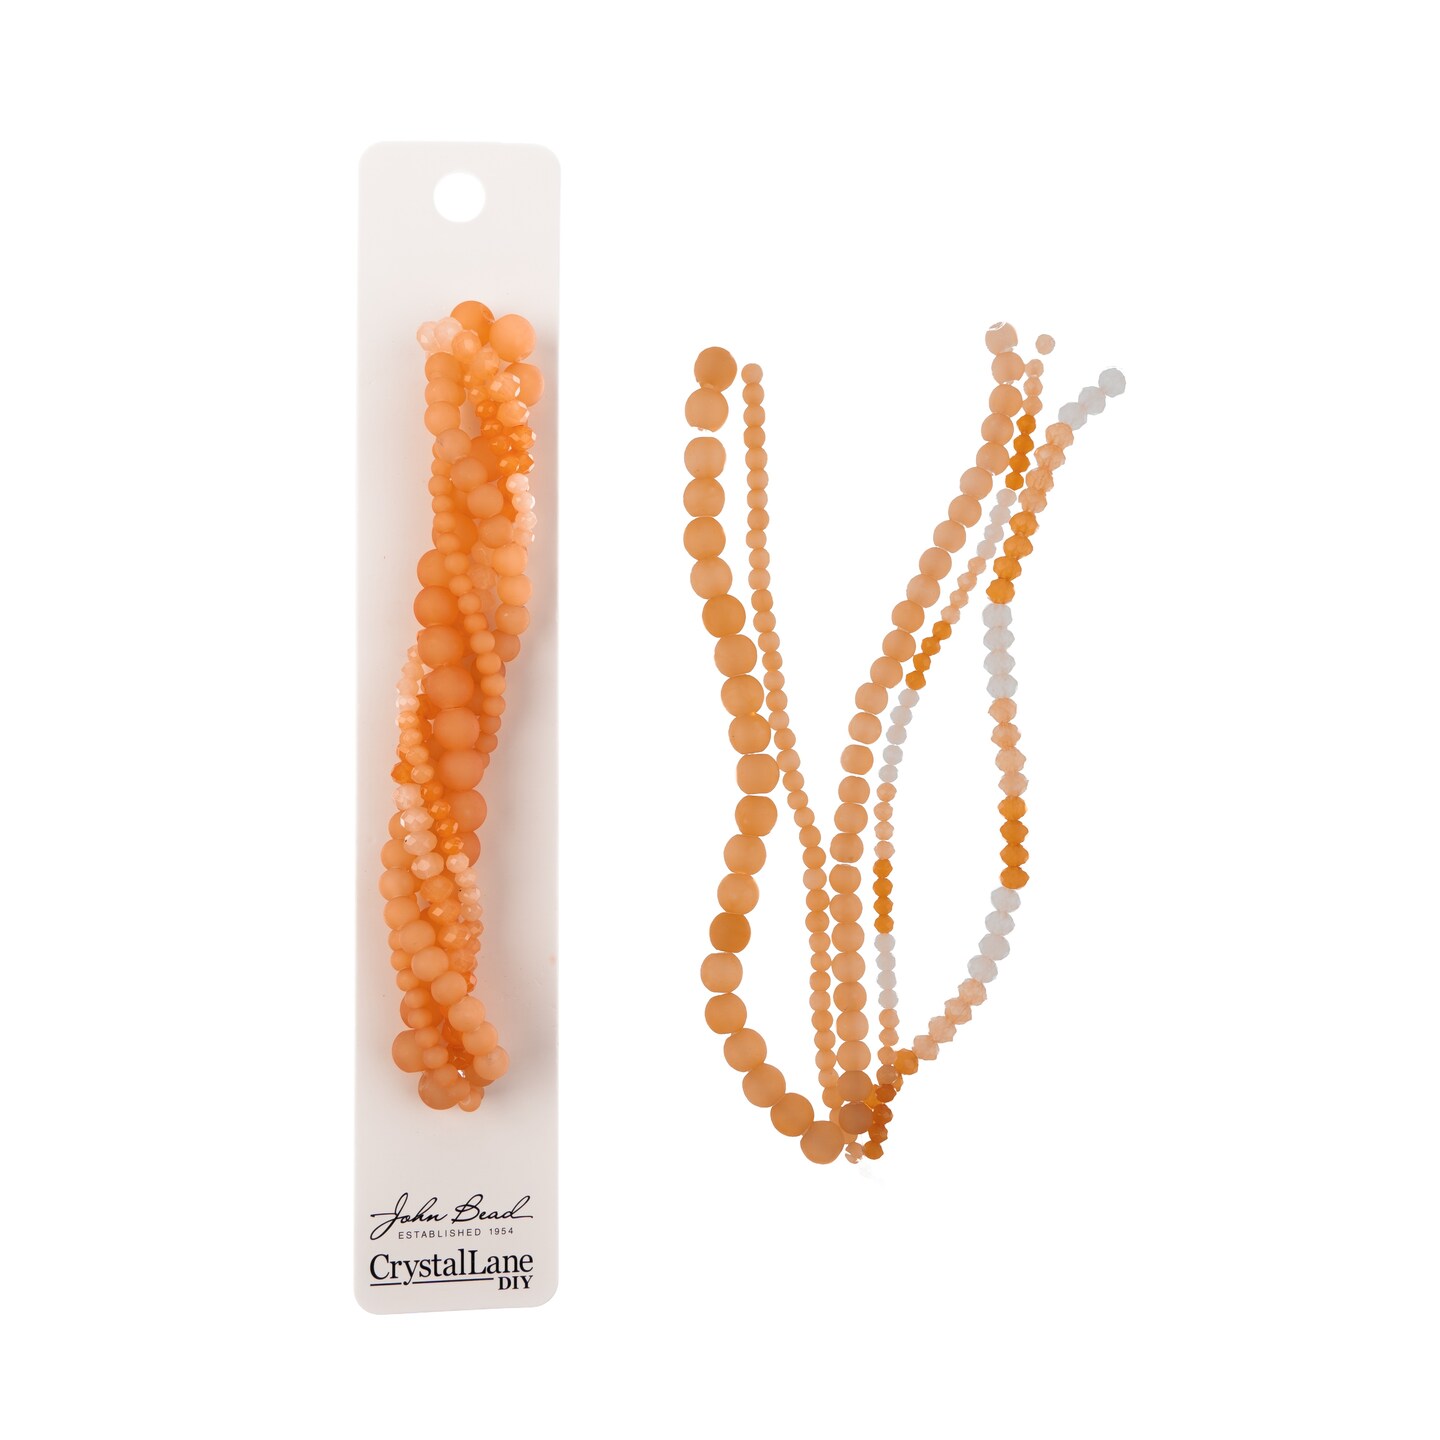 Crystal Lane DIY Solar Orange Twisted Glass &#x26; Pearls Beads, 5 Strands